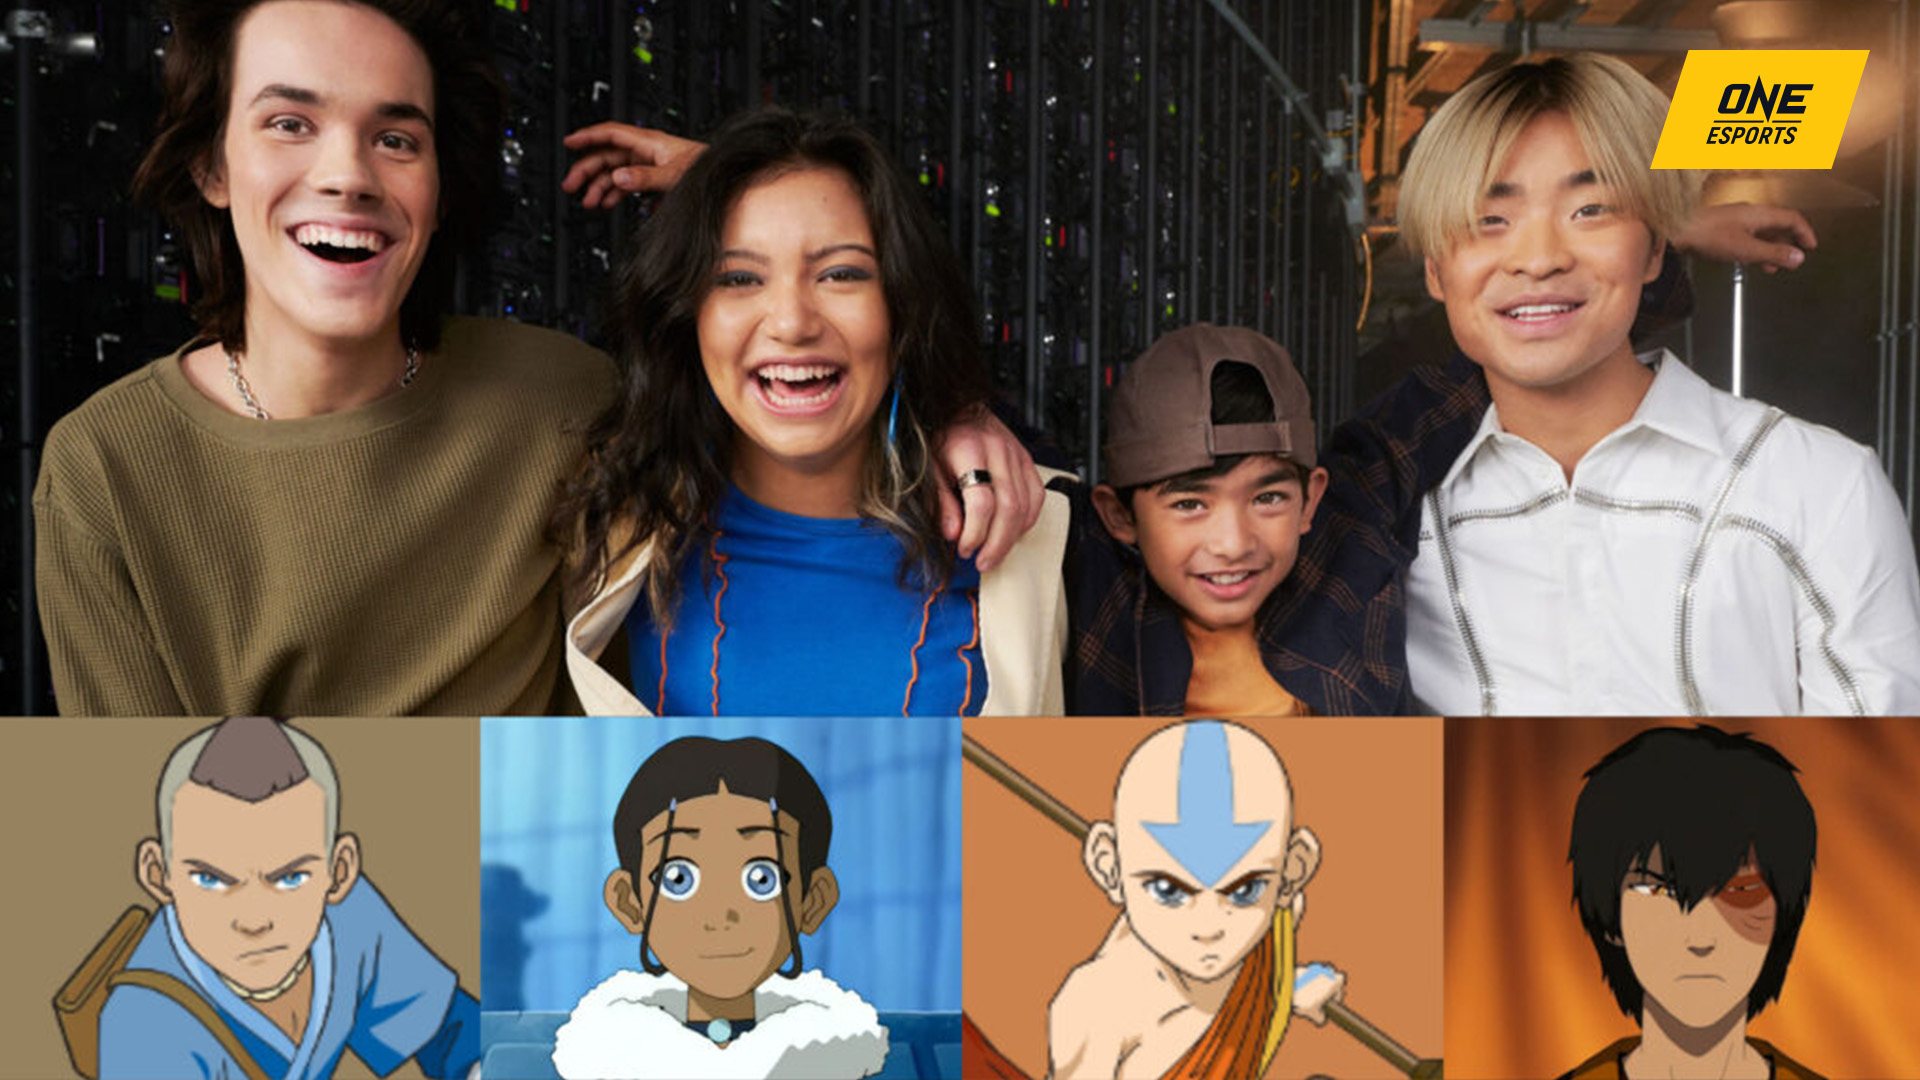 Avatar The Last Airbender Movie Casting Debate Rages On  BuddyTV